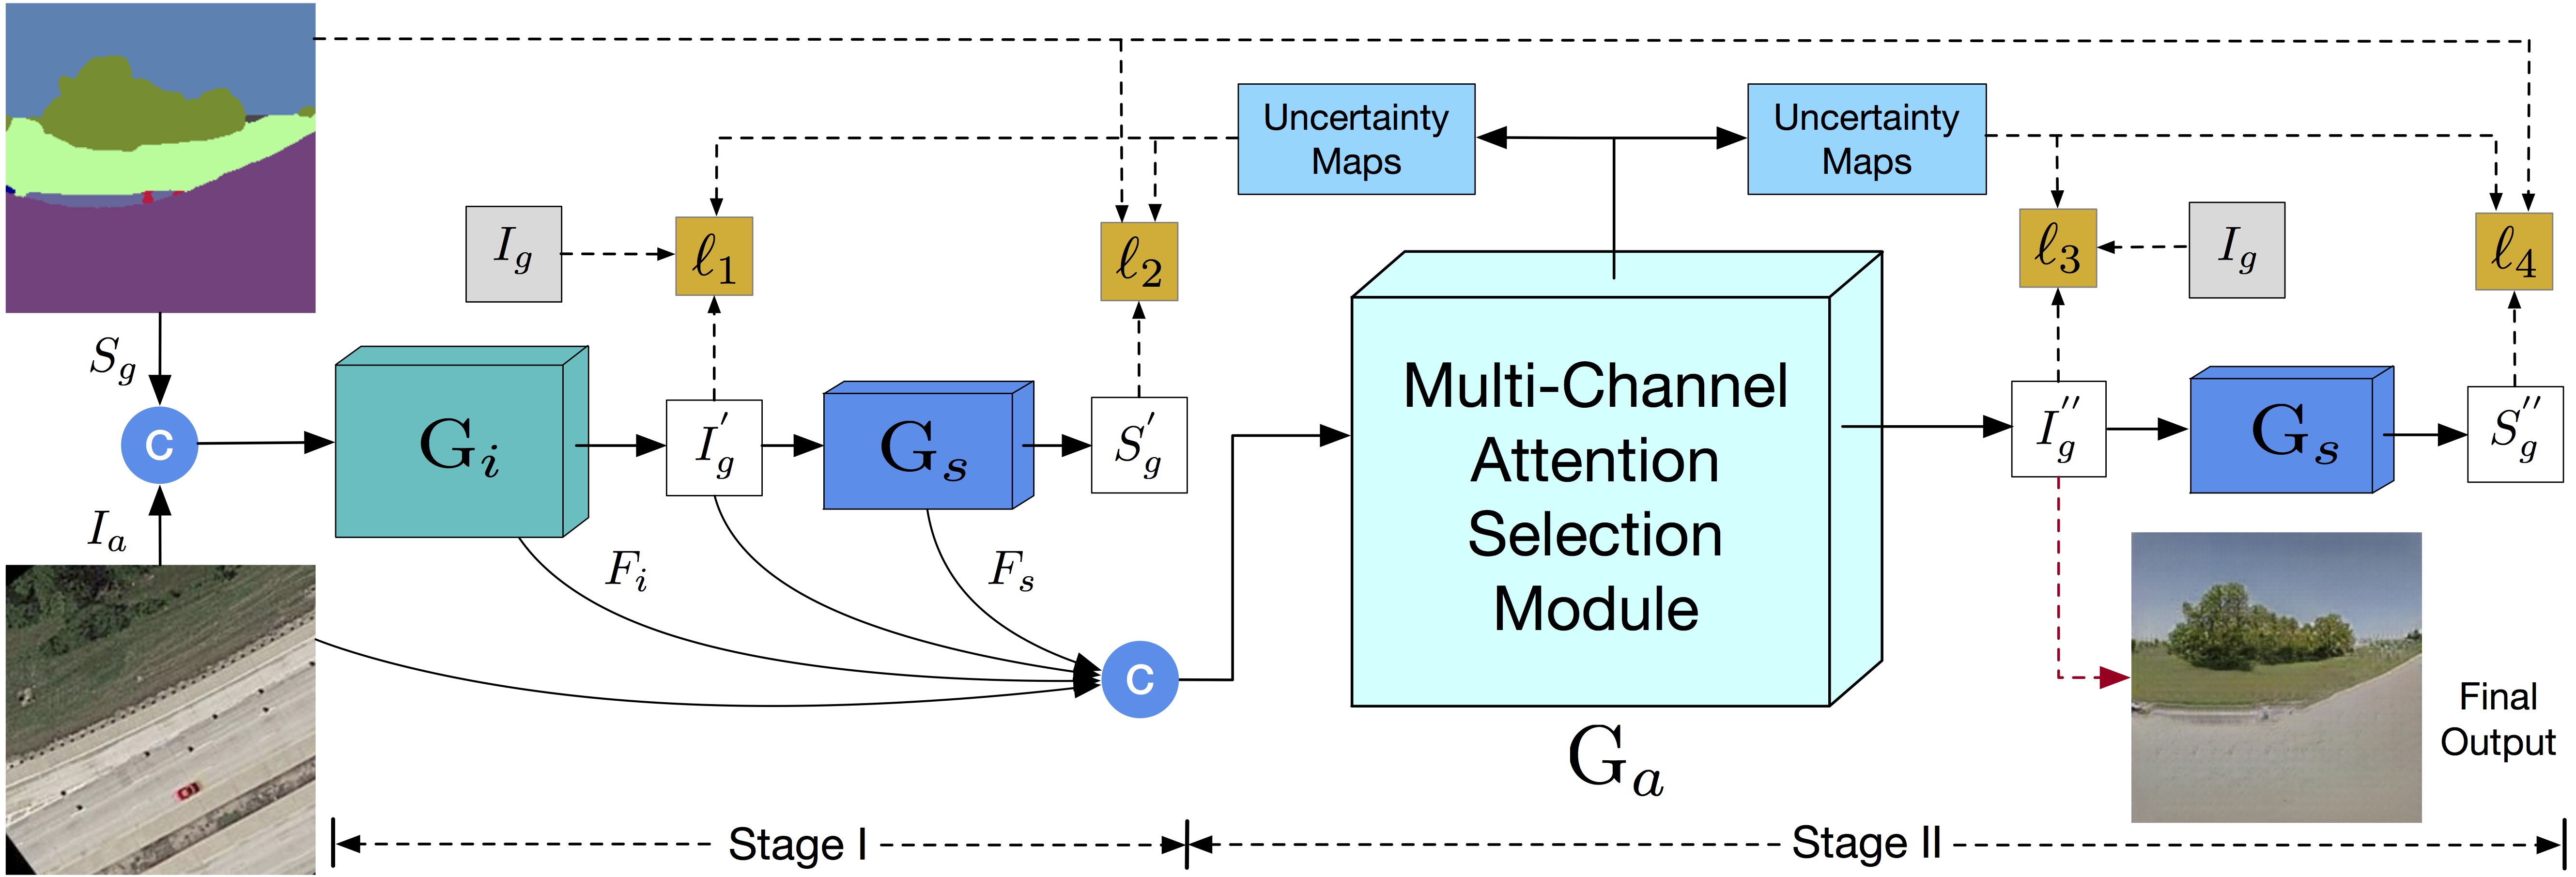 SelectionGAN Framework